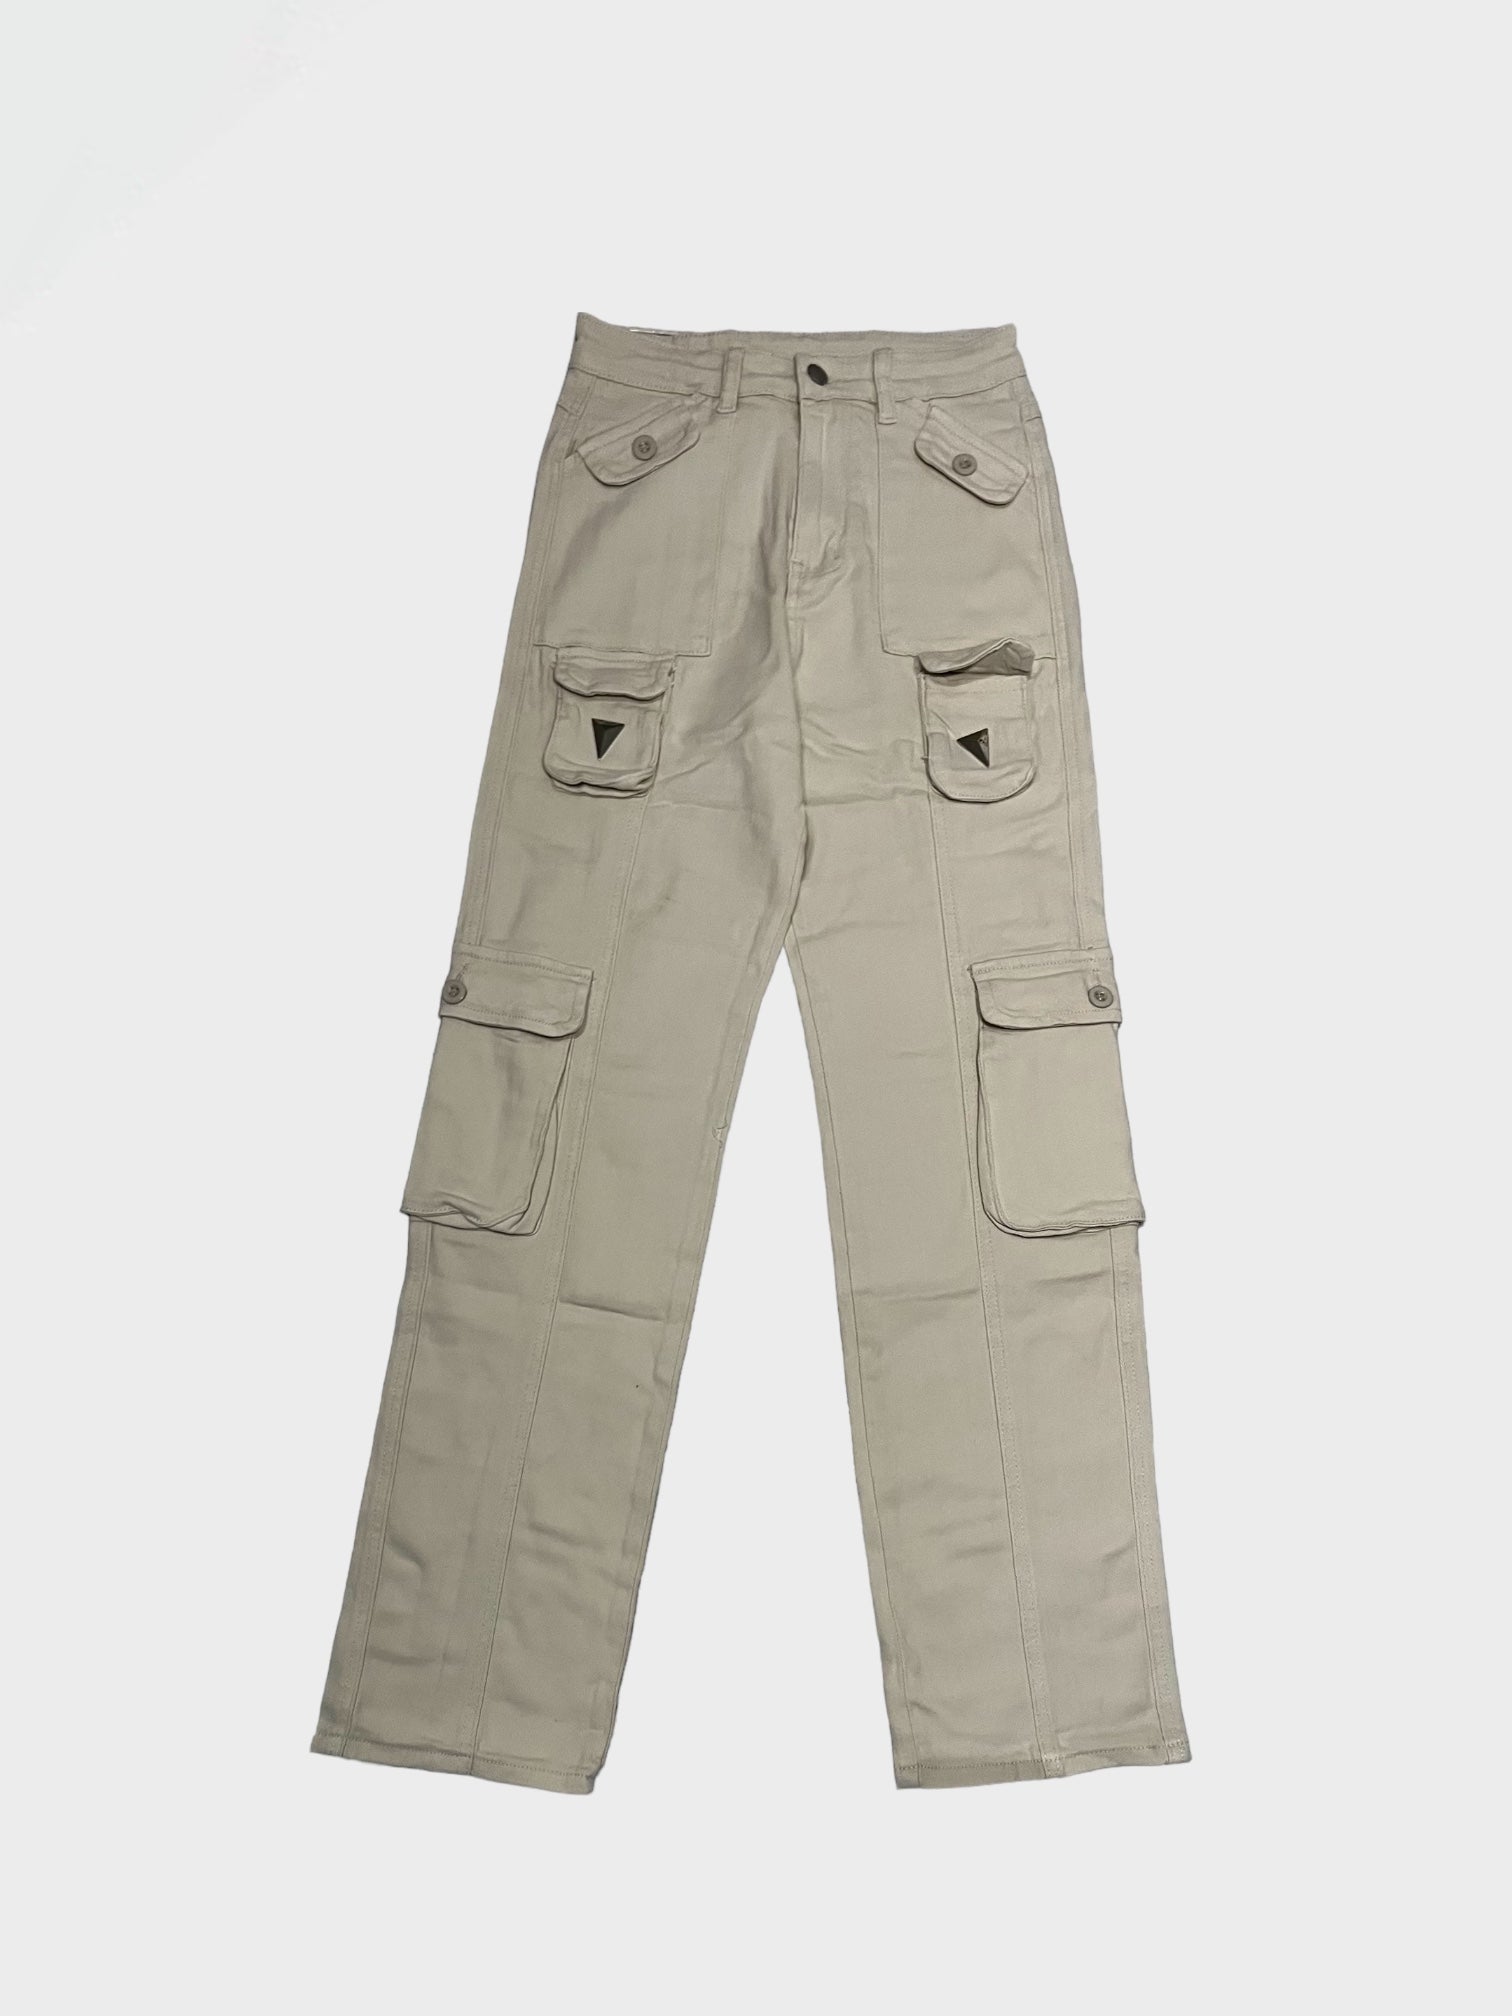 Cargo Pants Men,Casual Cargo Trousers Work Wear Combat Safety Cargo 6  Pocket Workout Full Pants Plus Size Khaki at Amazon Men's Clothing store